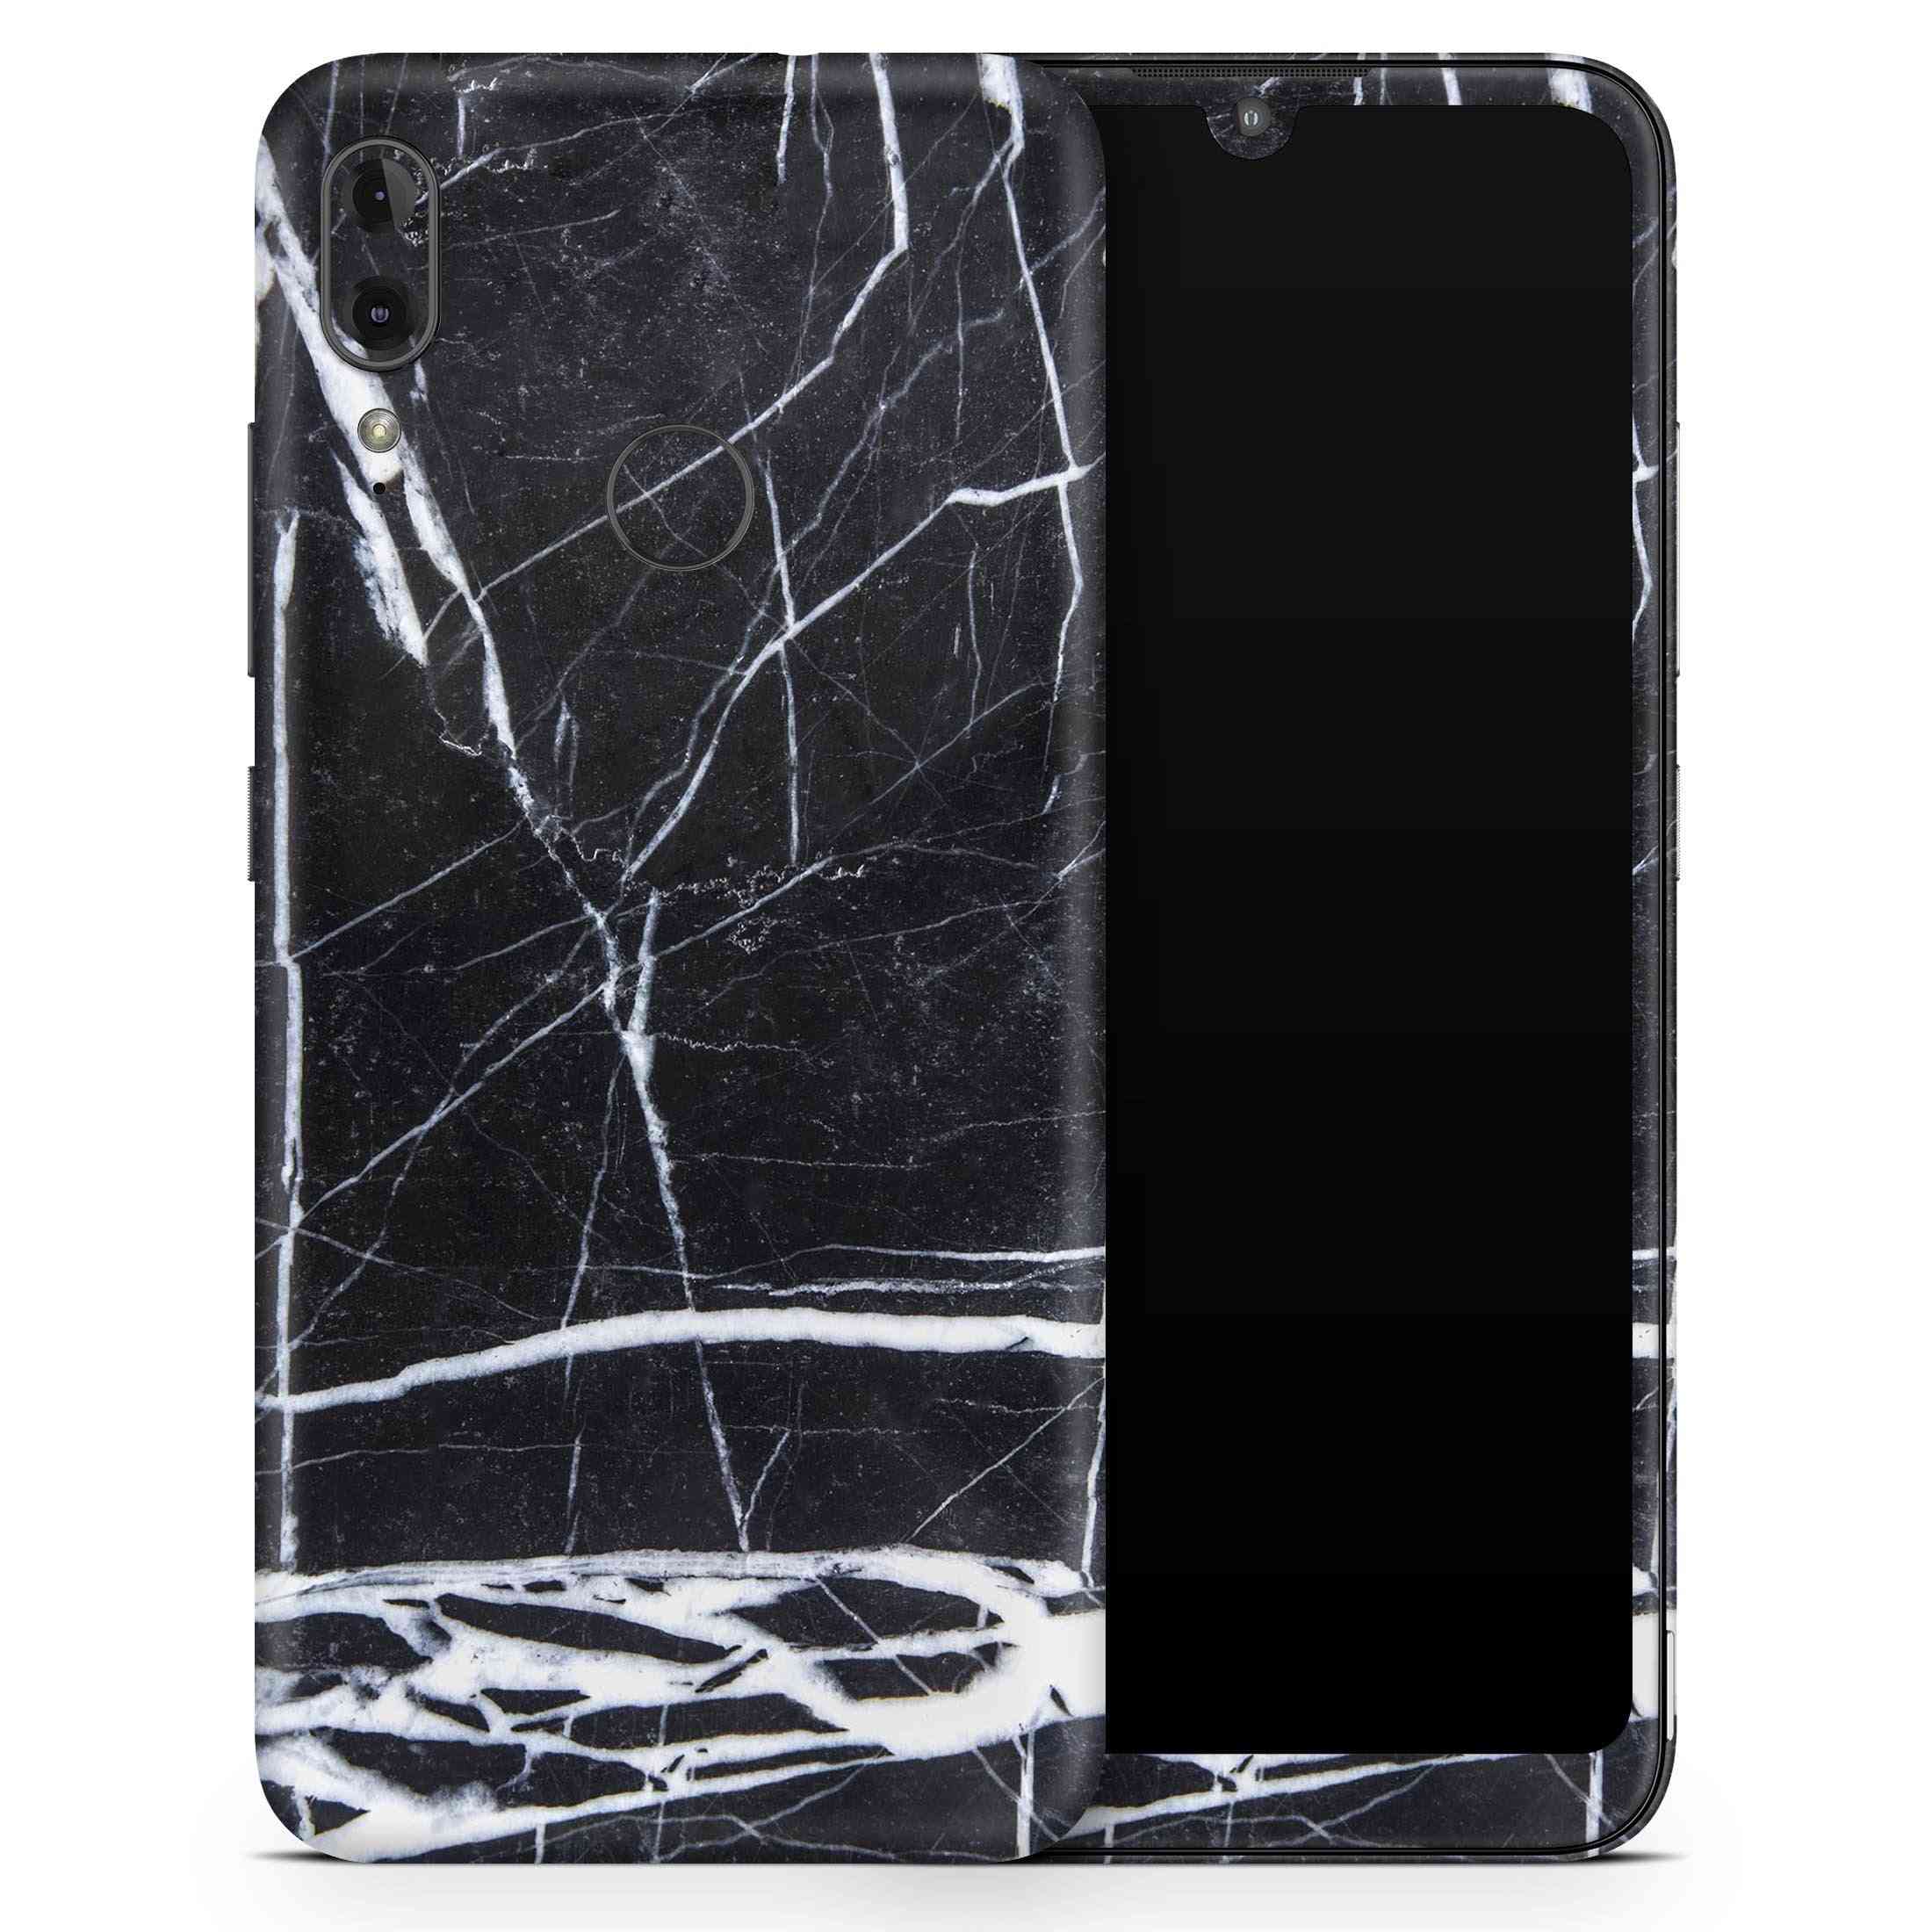 Natural Black & White Marble Stone - Full Body Skin Decal Wrap